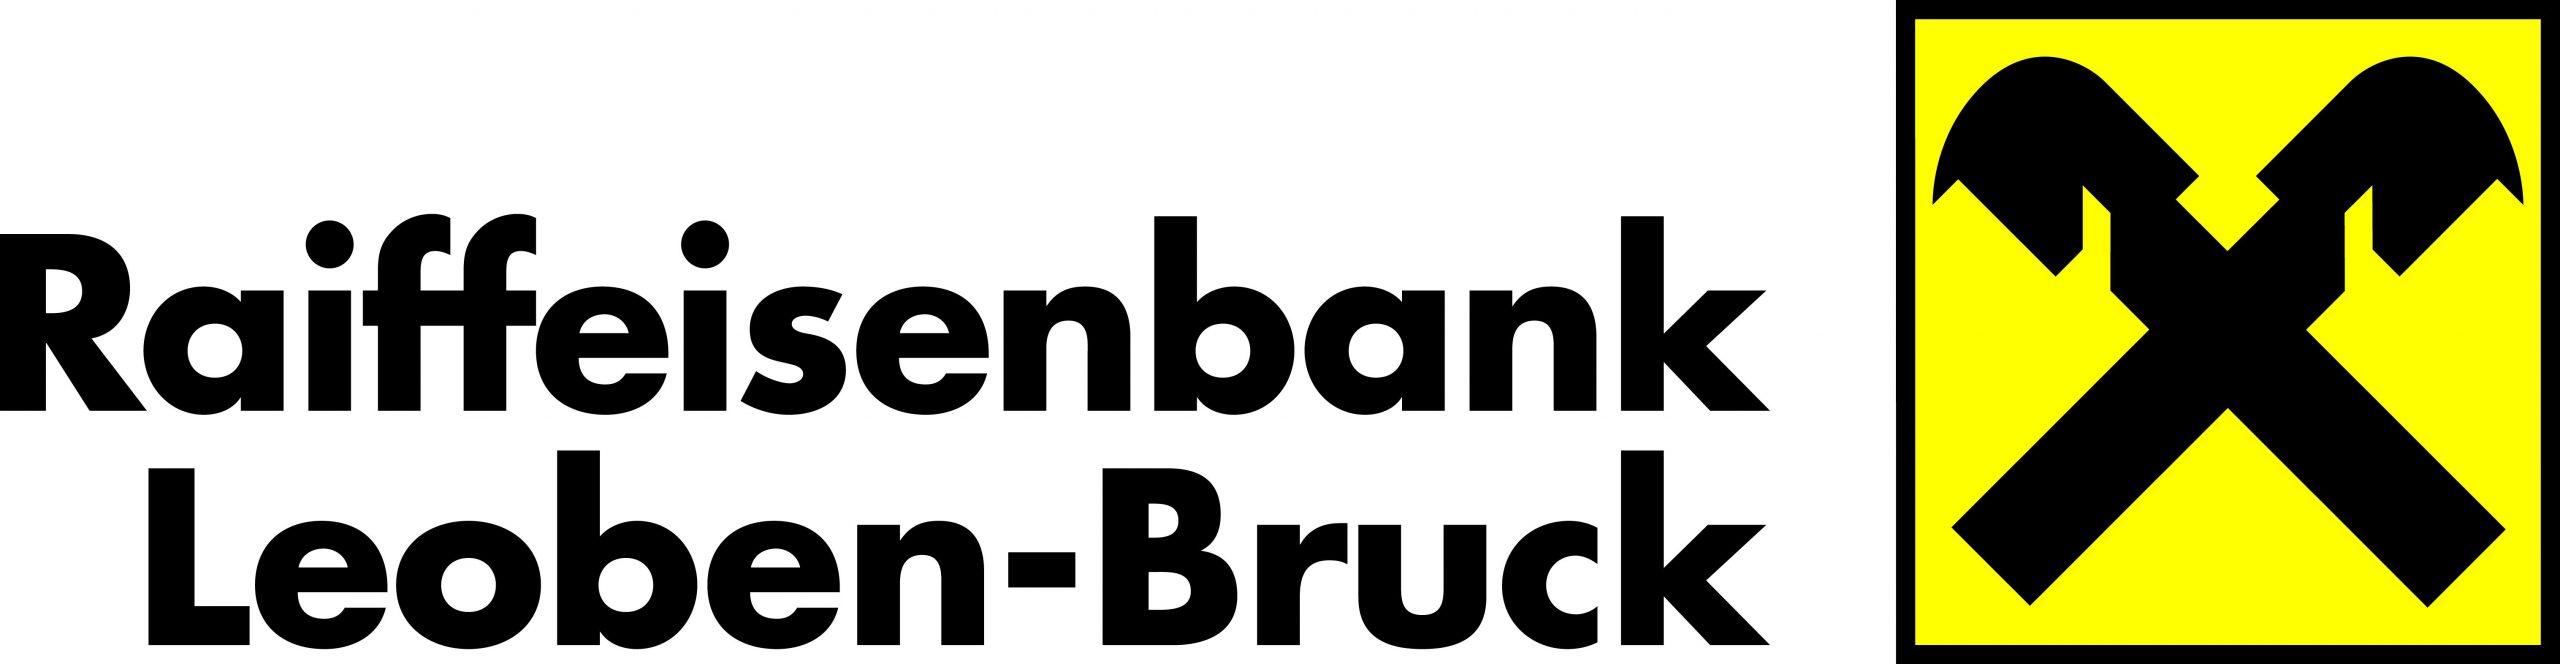 Raiffeisenbank Leoben-Bruck